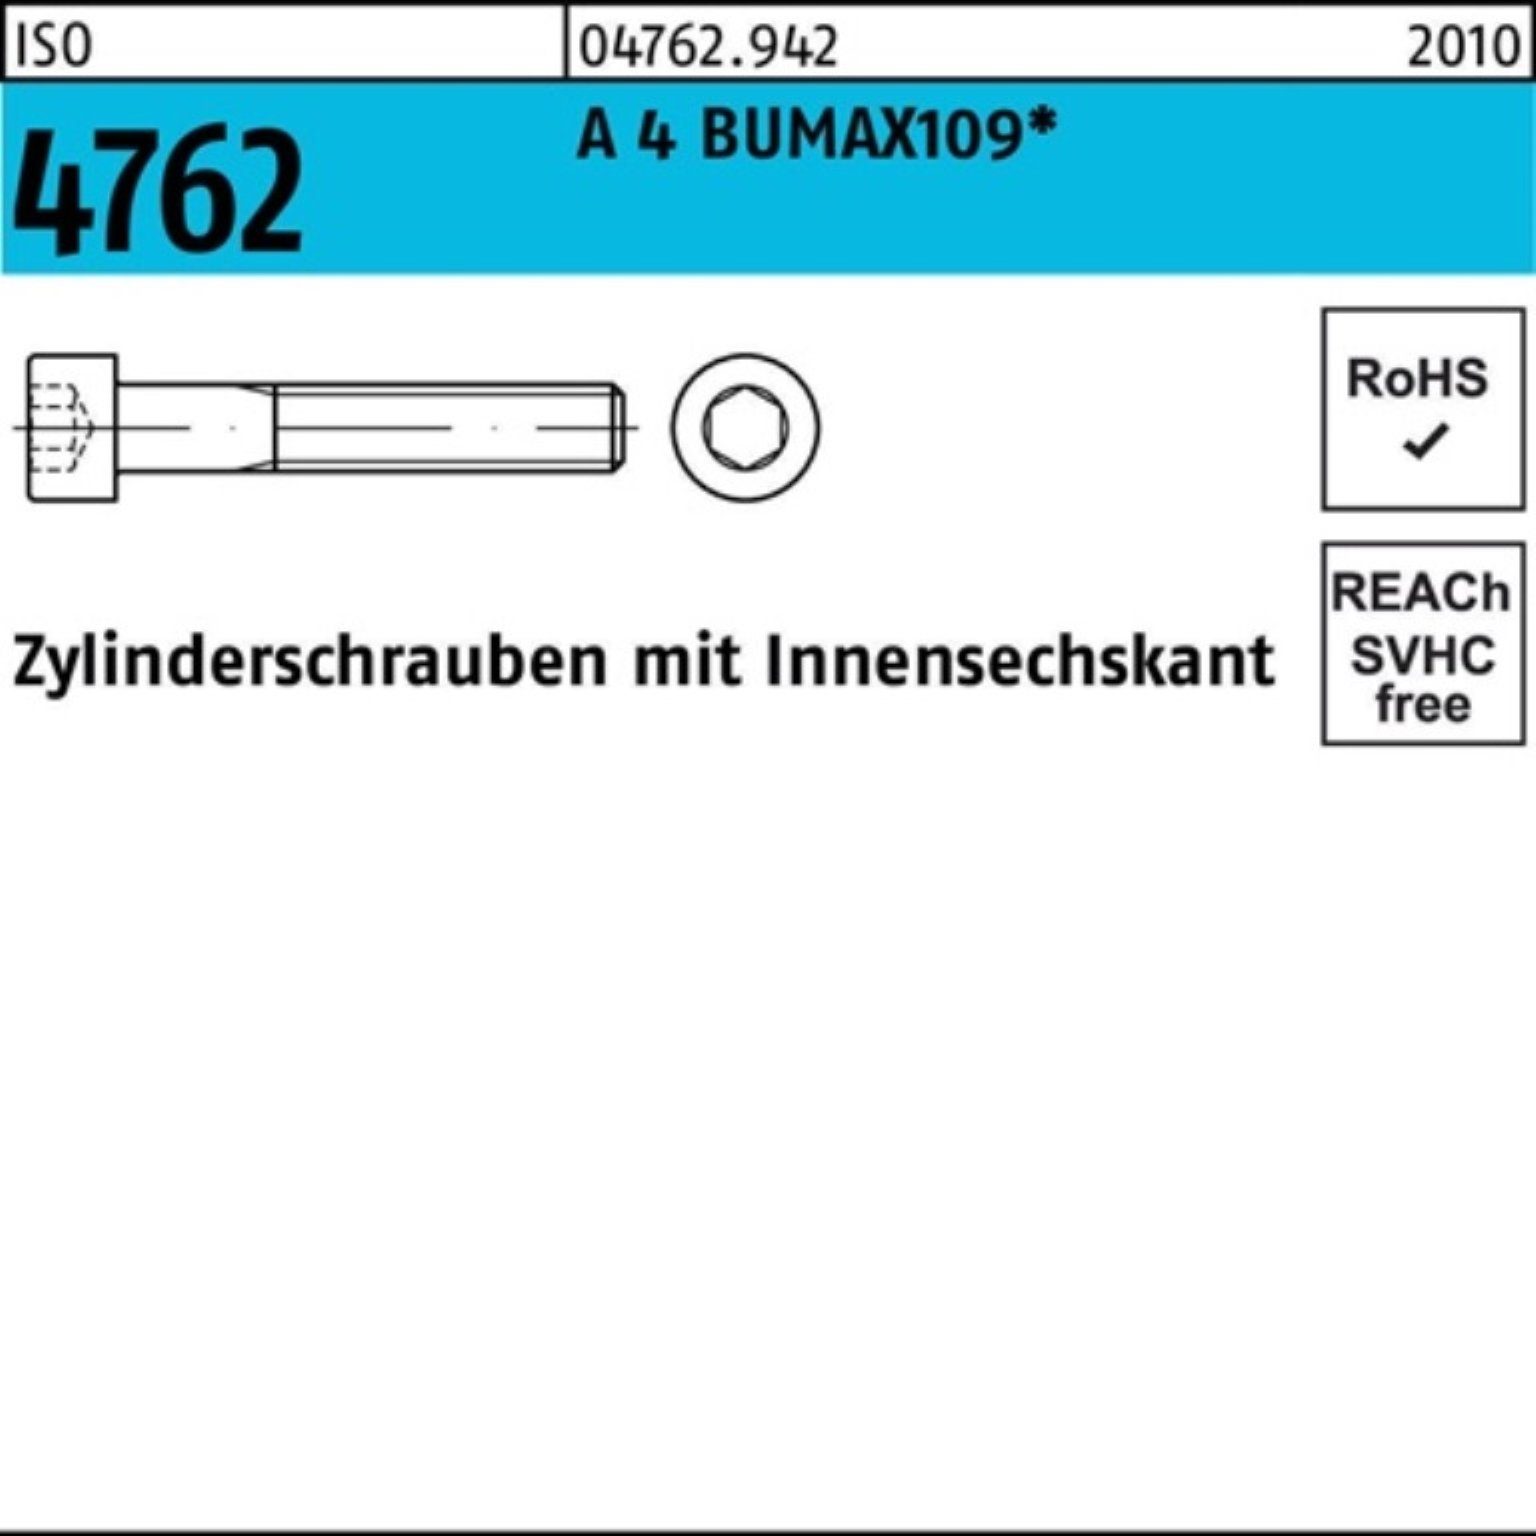 50 A 4 Pack Zylinderschraube Zylinderschraube 40 100er Bufab M8x Innen-6kt 4762 BUMAX109 ISO